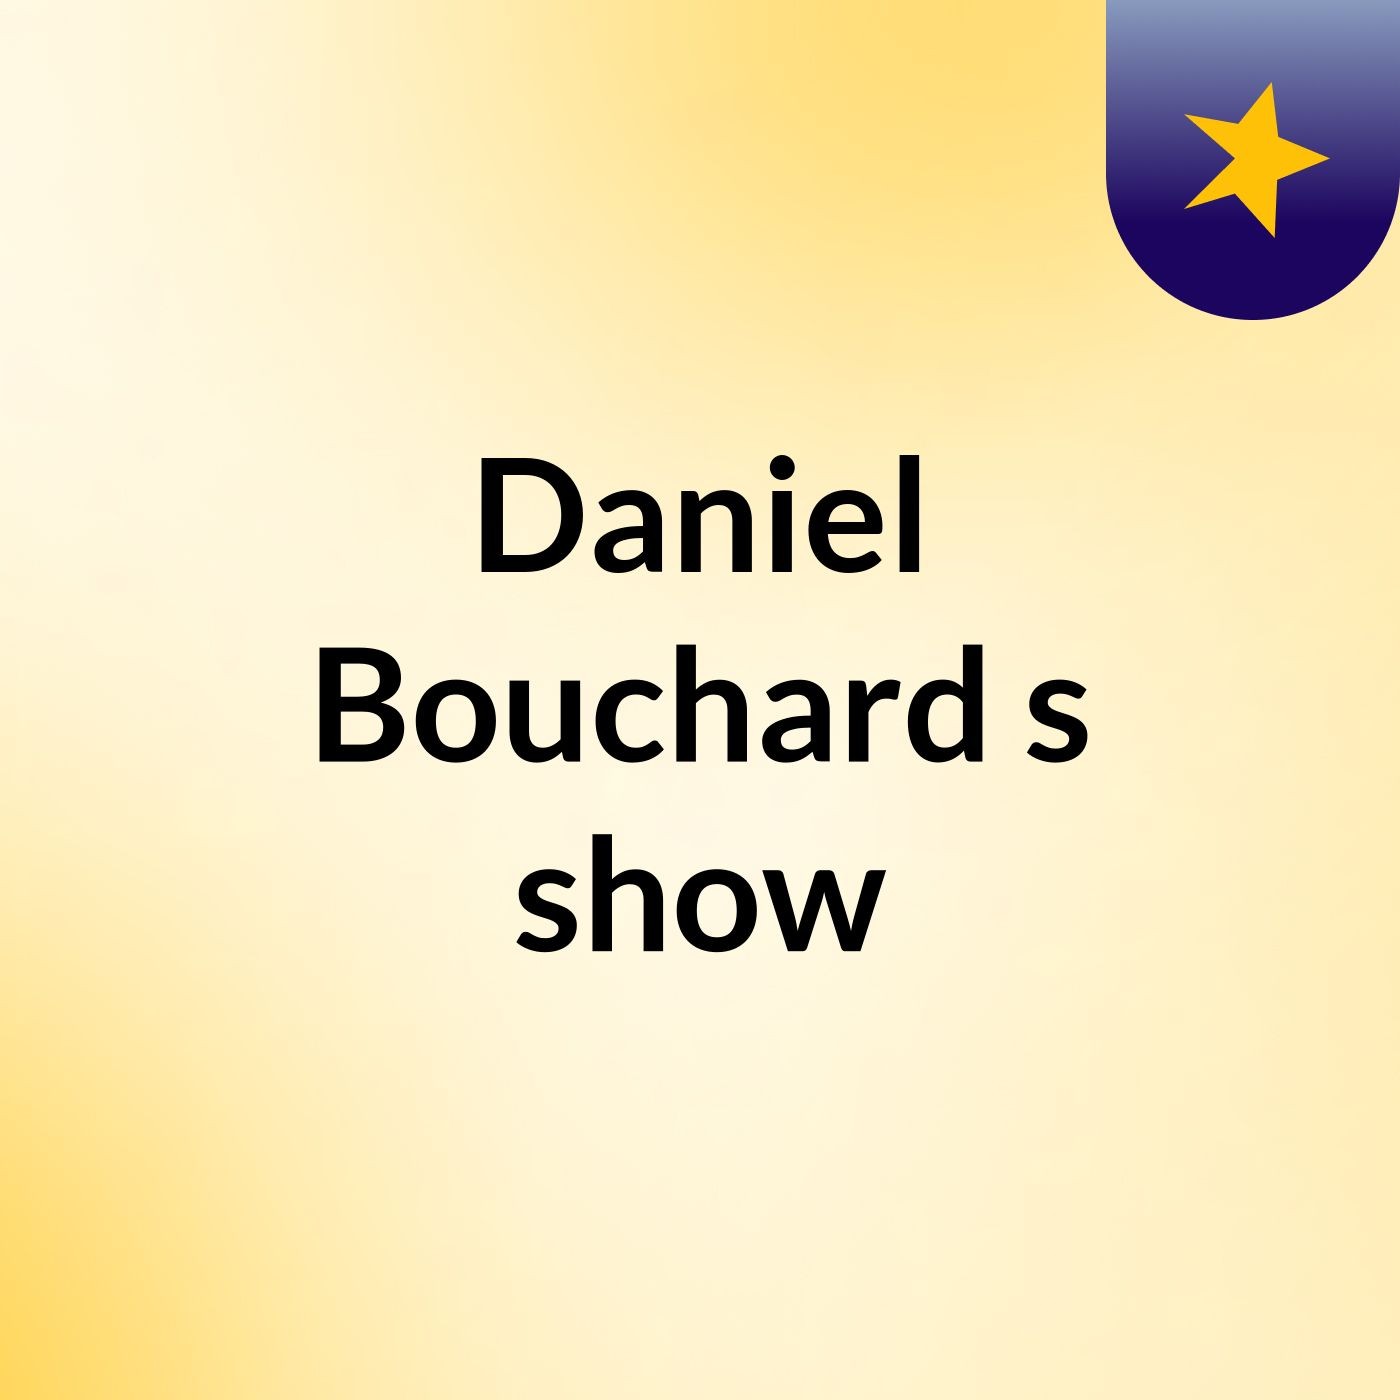 Daniel Bouchard's show